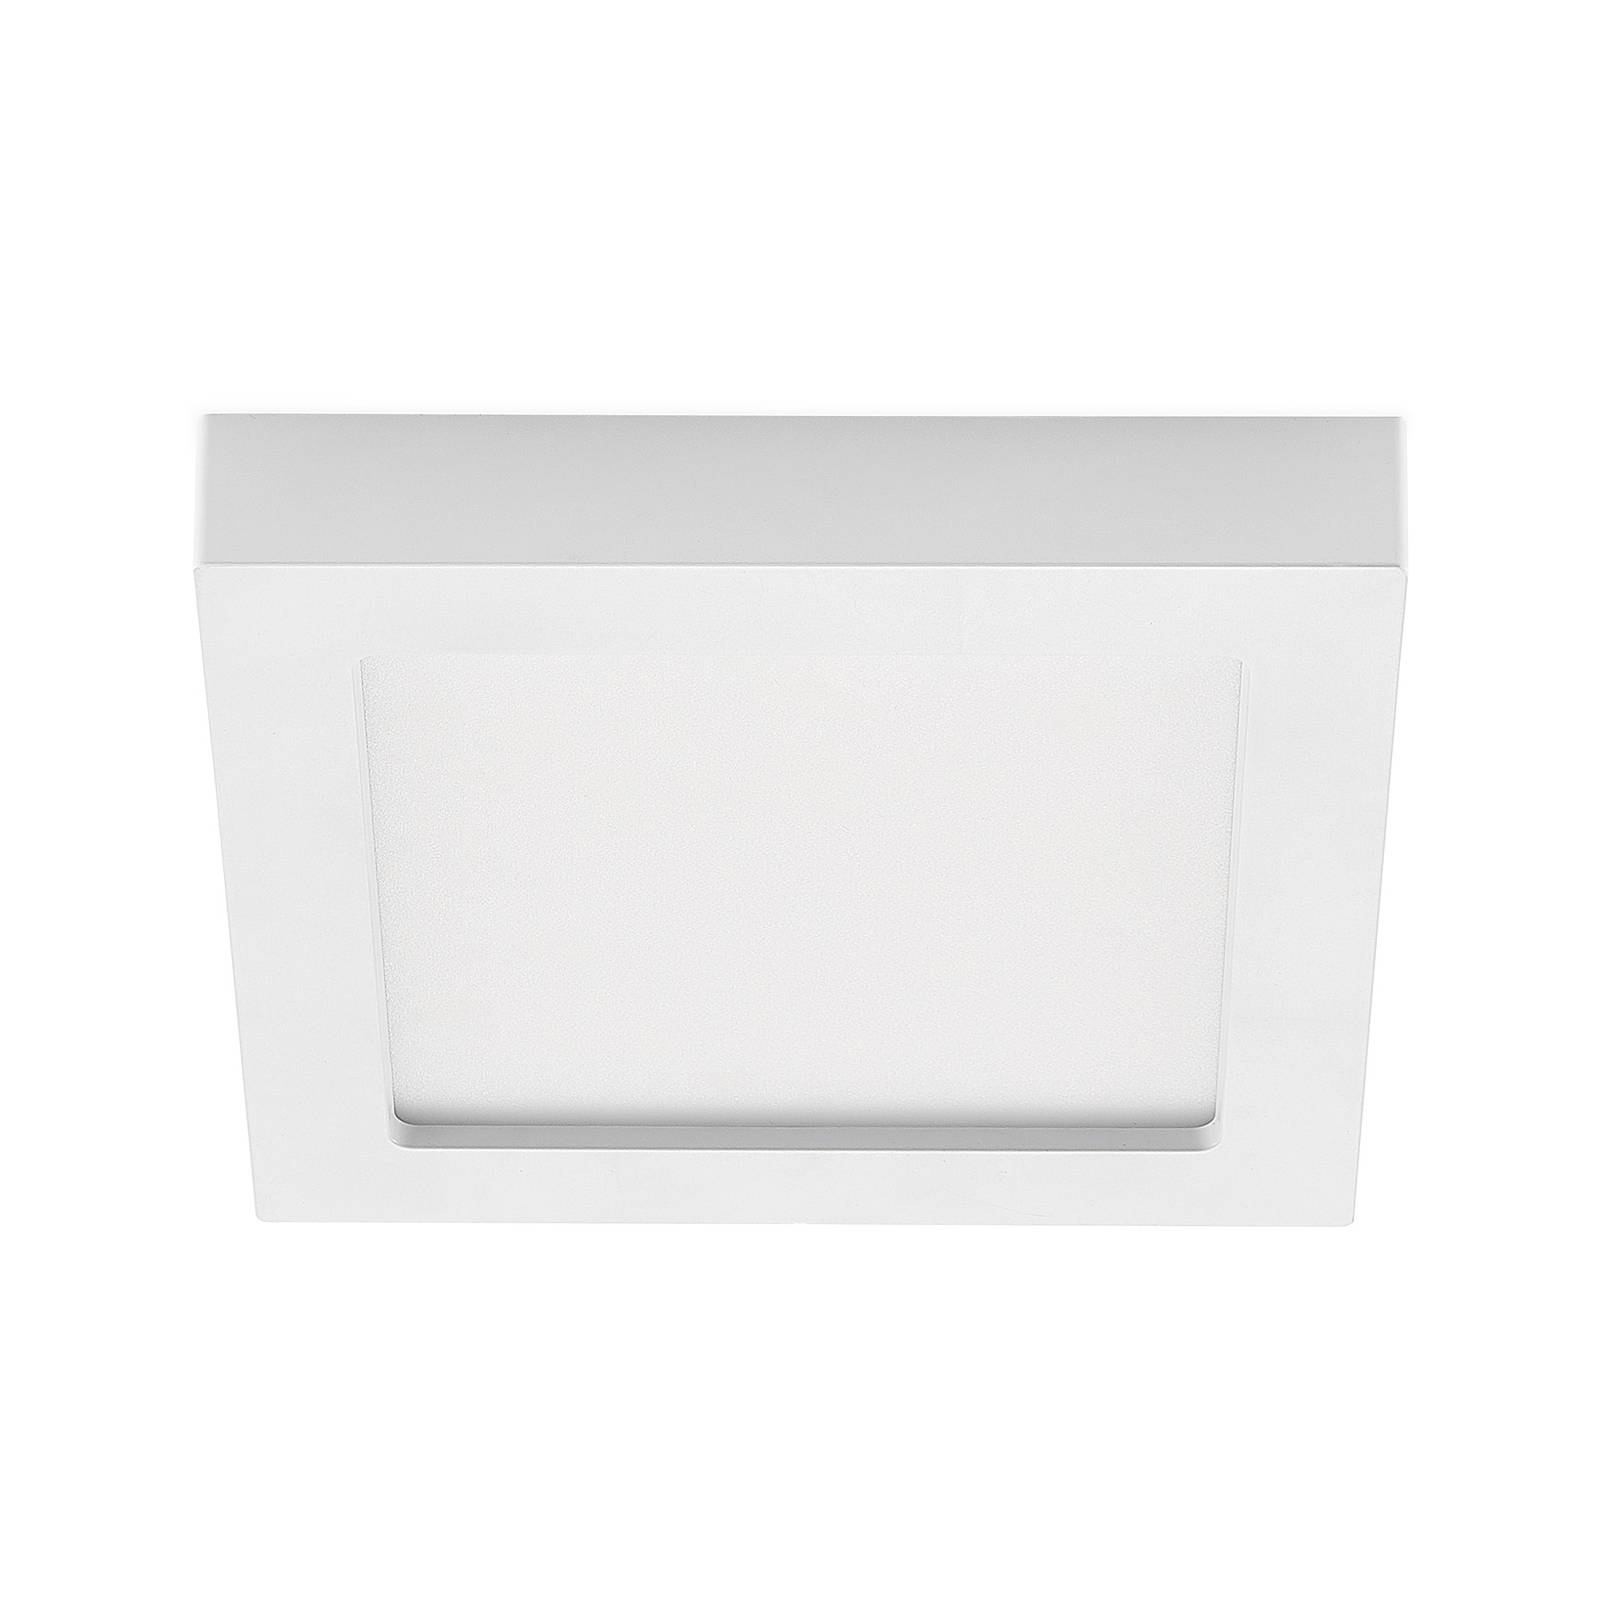 Image of Prios Alette plafonnier LED, blanc, 22,7 cm 24 W 4251911707694